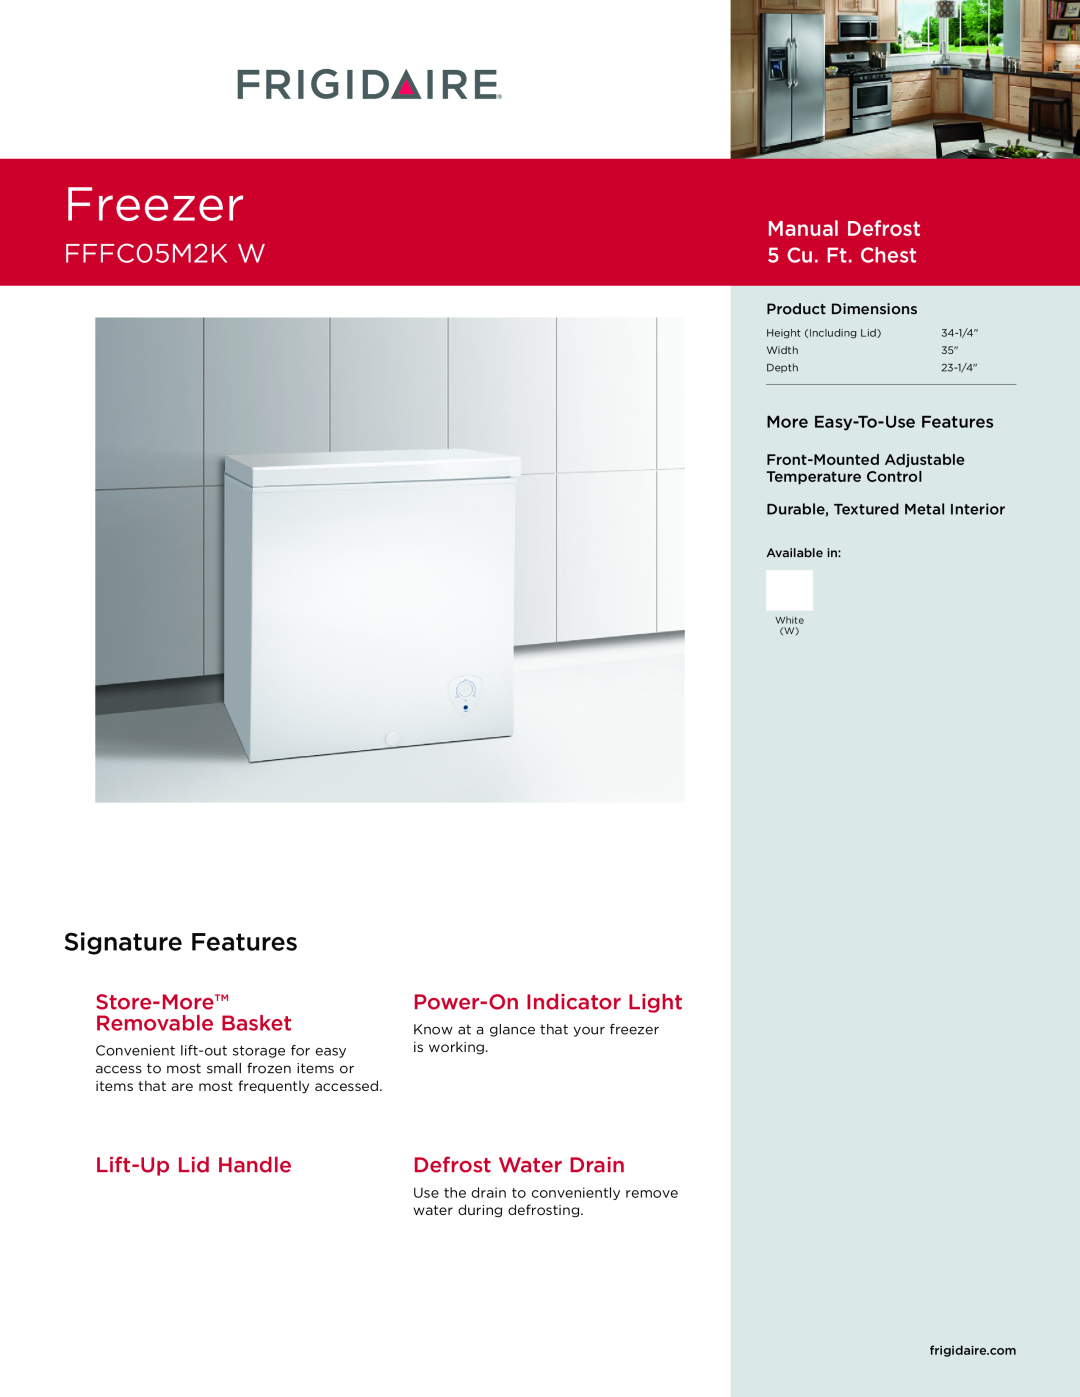 Frigidaire FFFC05M2KW dimensions Freezer, FFFC05M2K W, Signature Features, Manual Defrost 5 Cu. Ft. Chest 